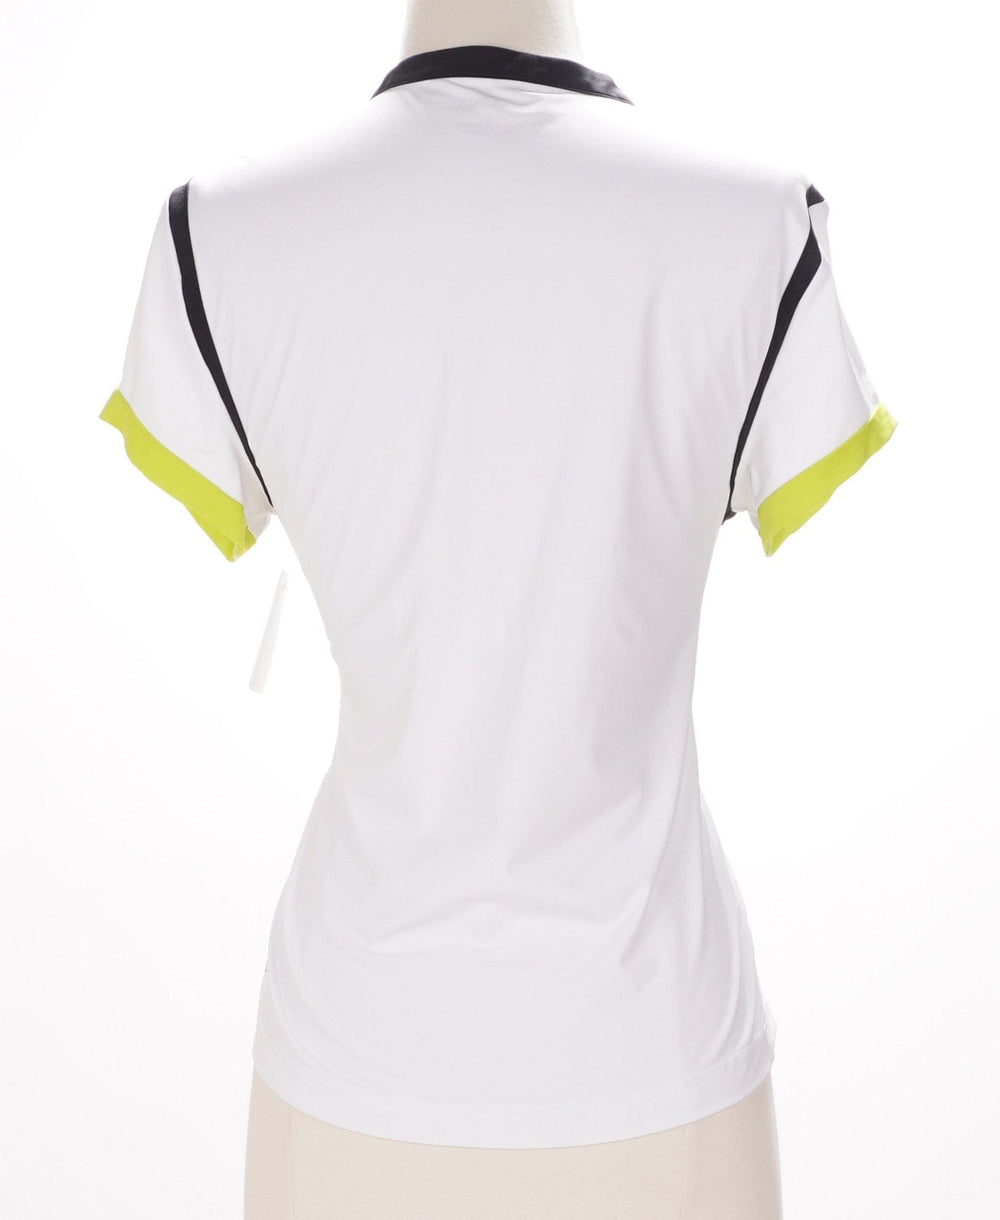 Kinona White / Small Kinona Short Sleeve Top with Buttons - White-Black-Yellow - Small